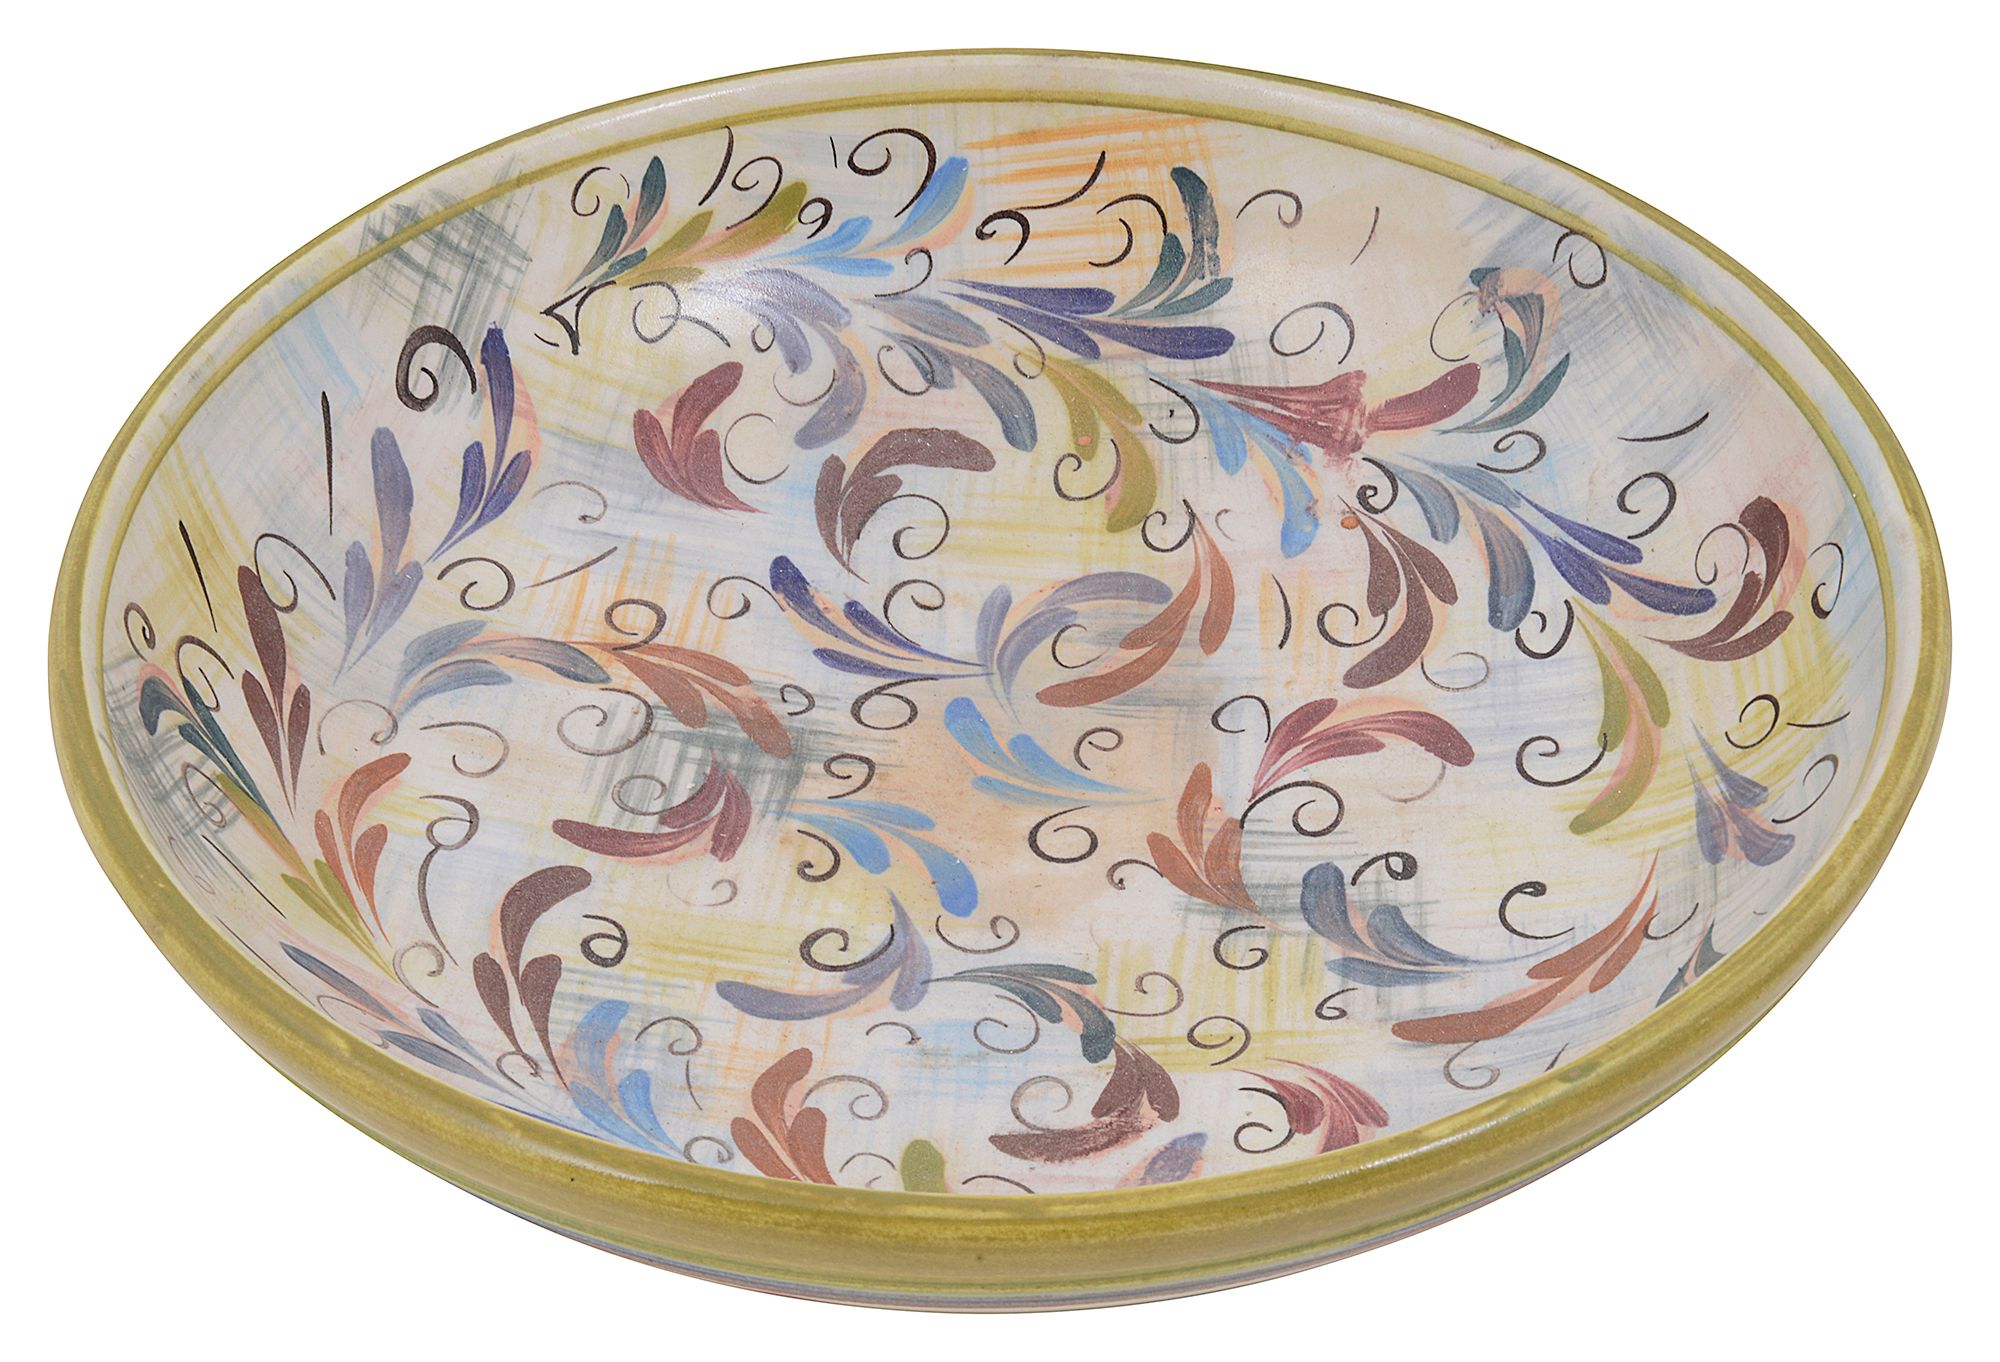 A mid 20th century Denby bowl designed by Glynn Colledge